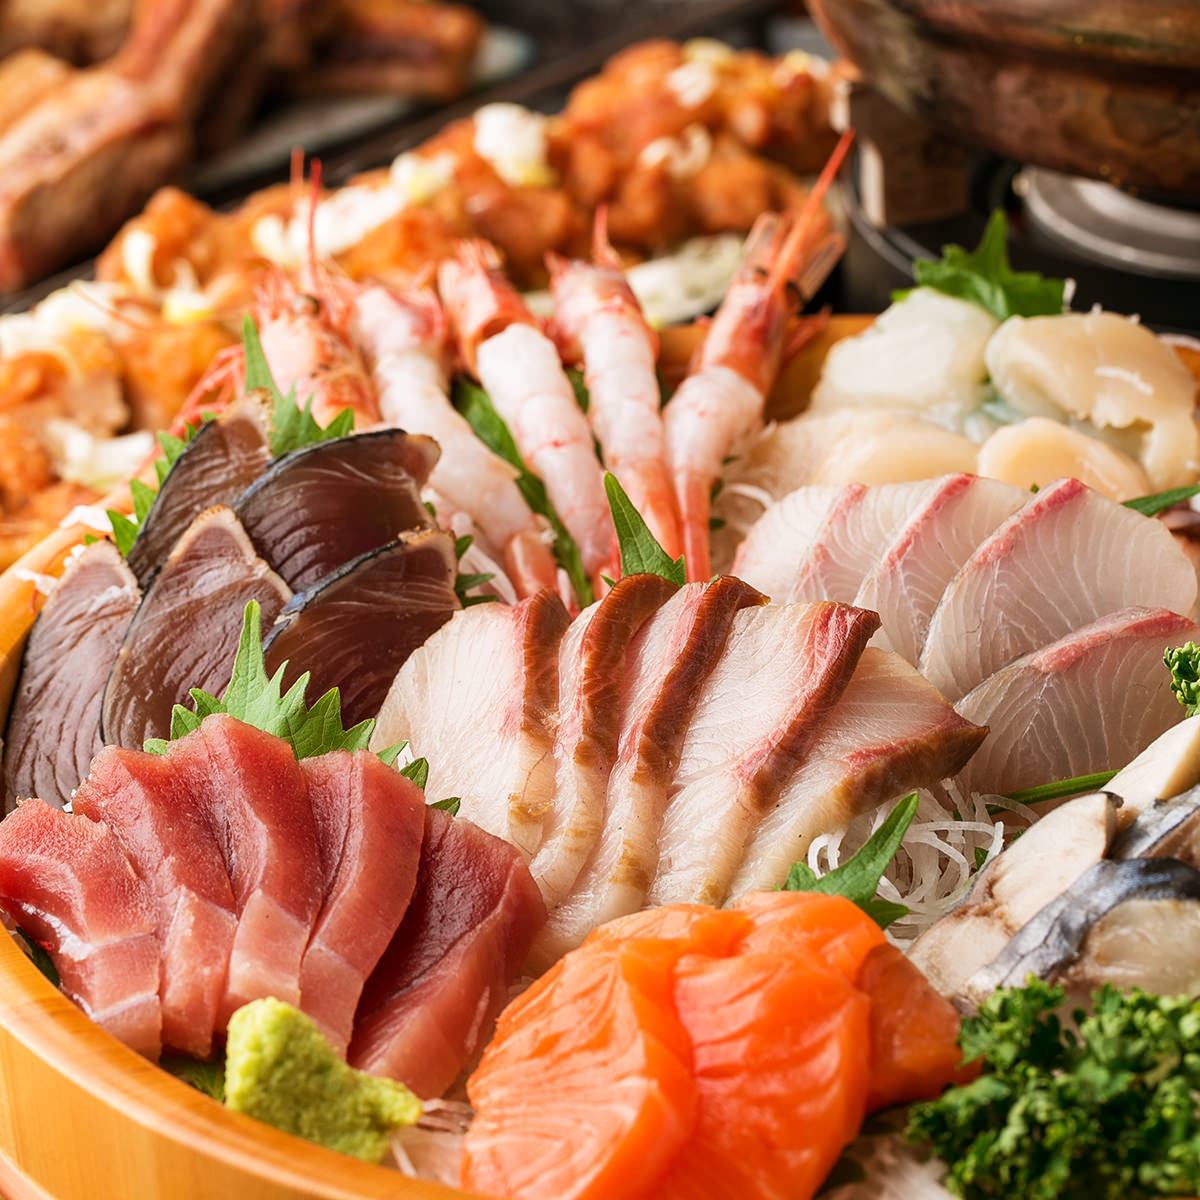 Enjoy the exquisite taste and freshness of Ibaraki's seafood!